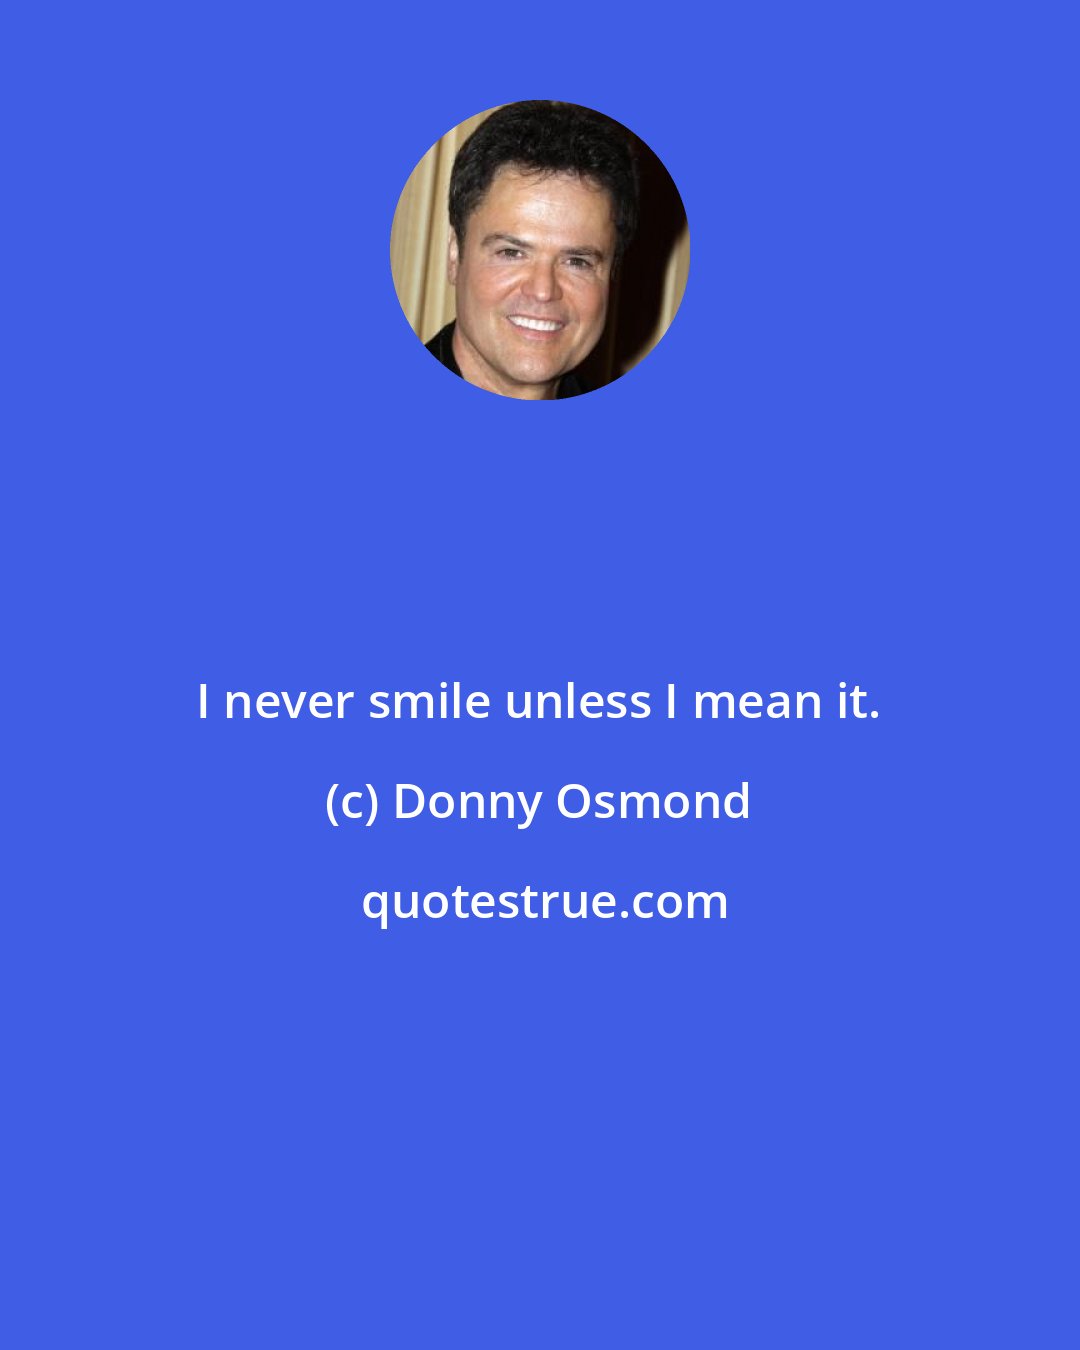 Donny Osmond: I never smile unless I mean it.